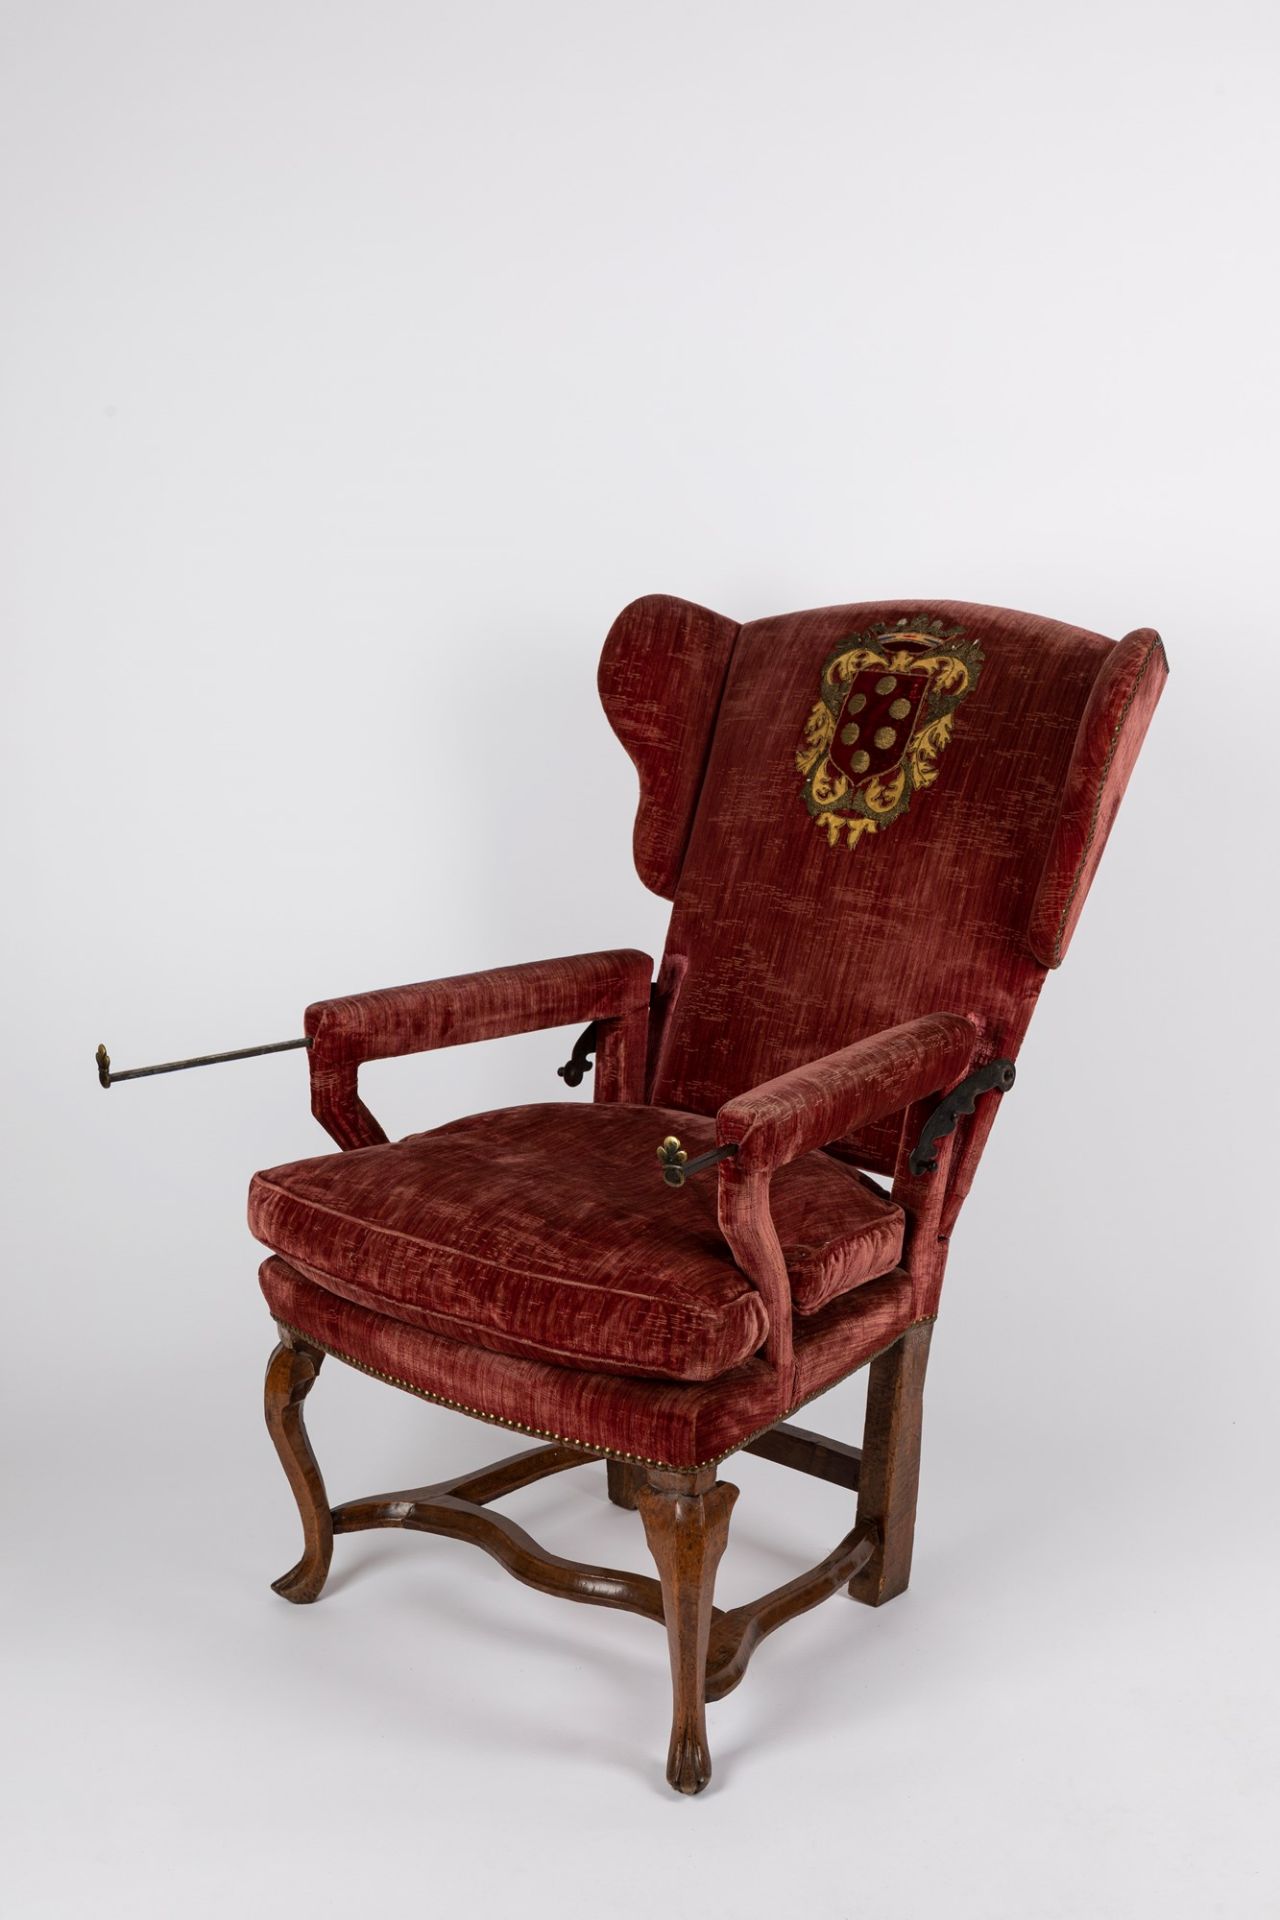 A walnut reclining armchair, Veneto, 18th c. - Image 2 of 2